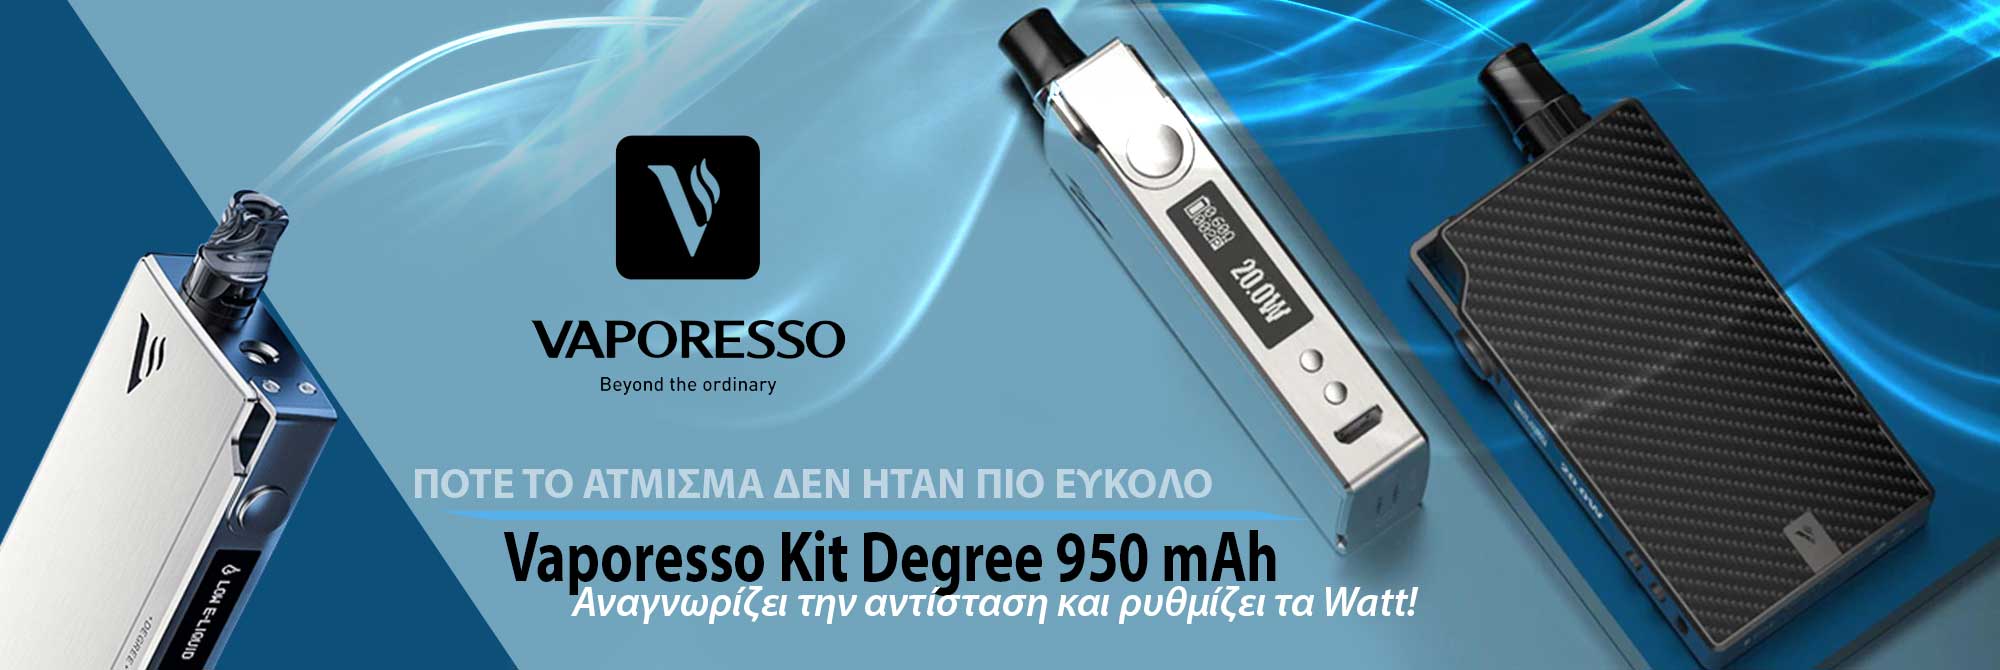 BANNER Vaporesso Kit Degree 950 mAh 2000x670px